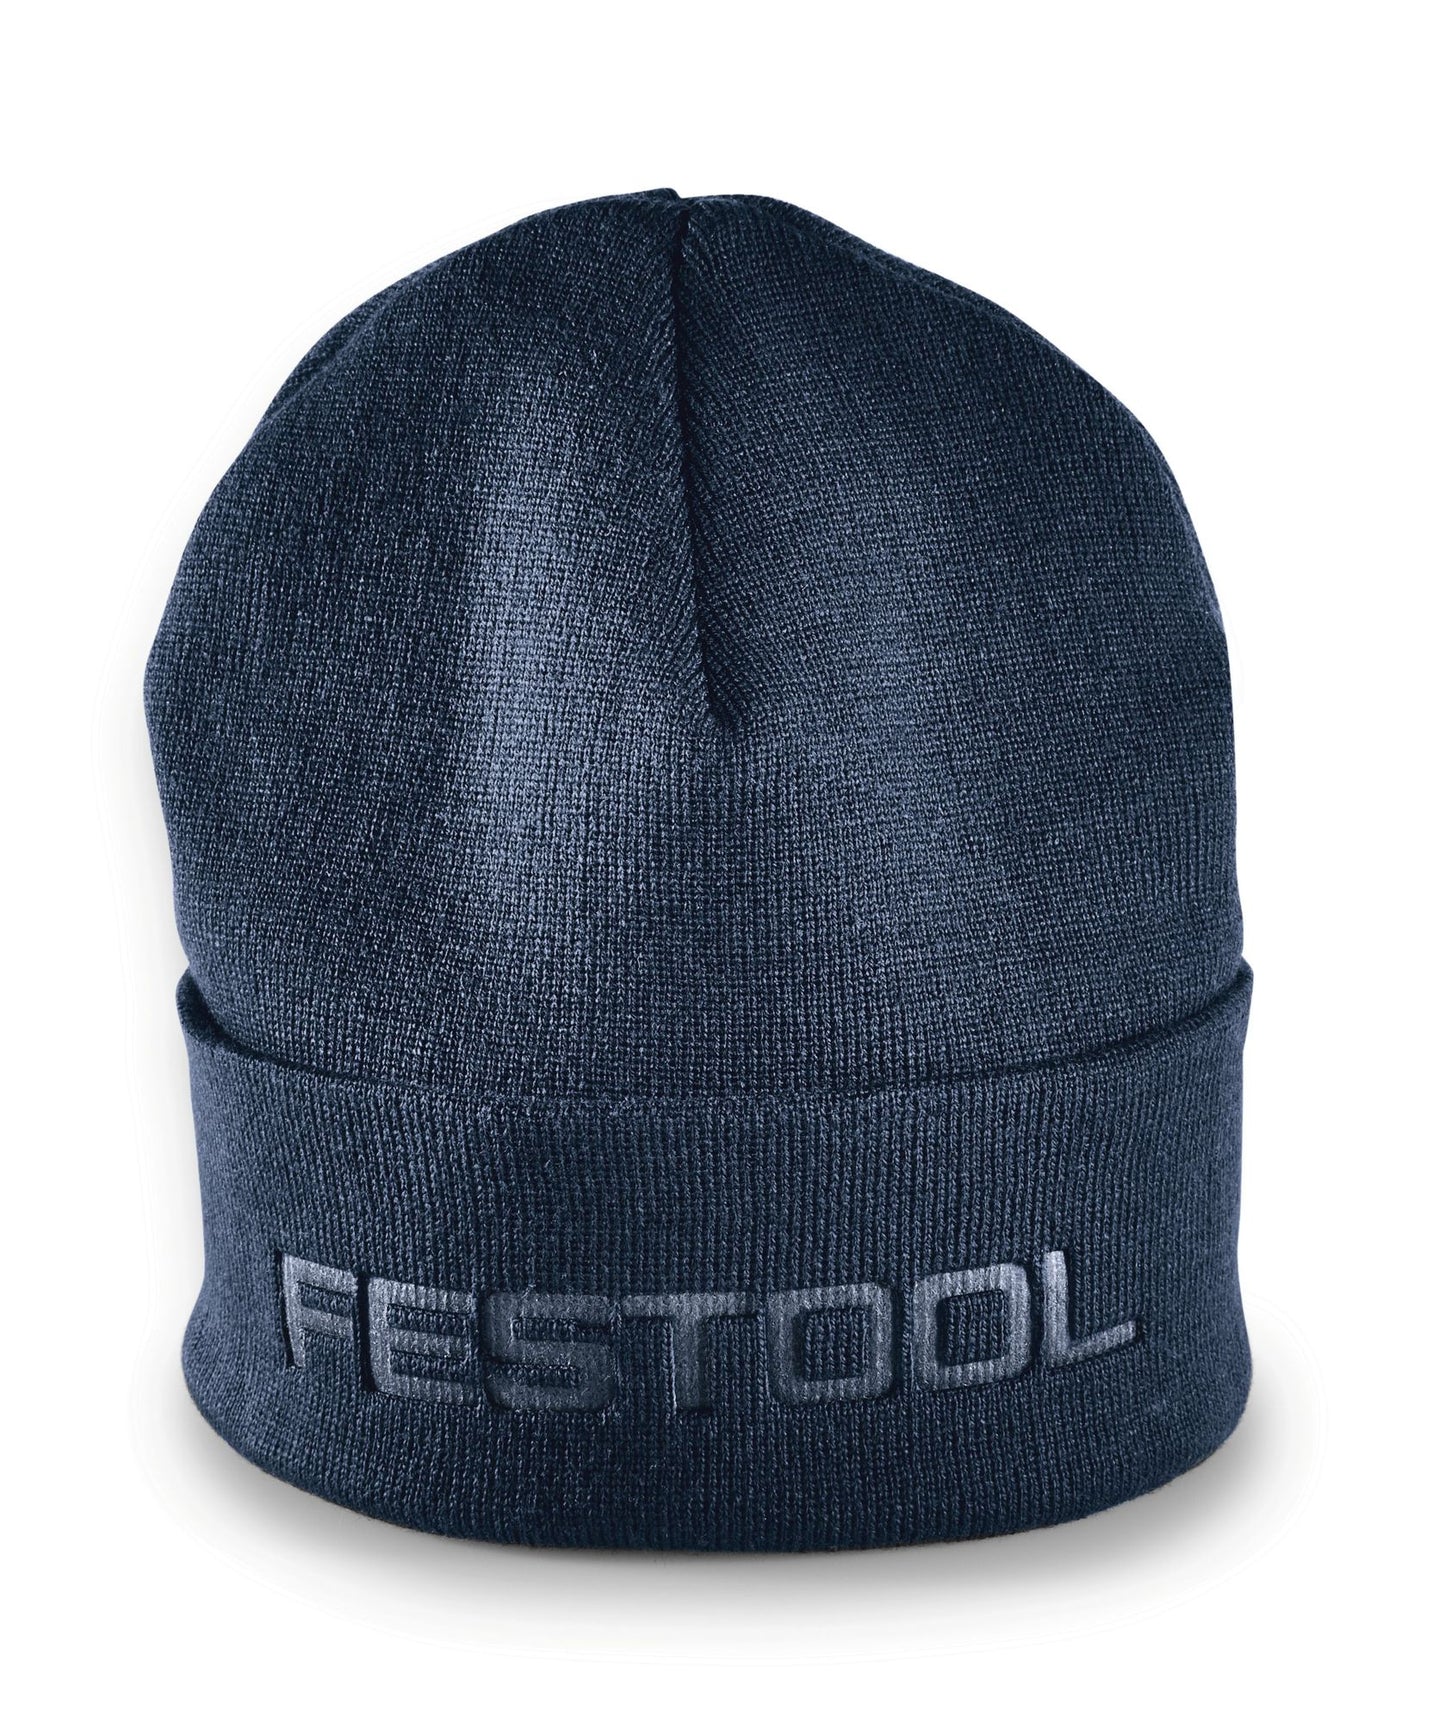 Festool Festool Strickmütze ( 202308 )